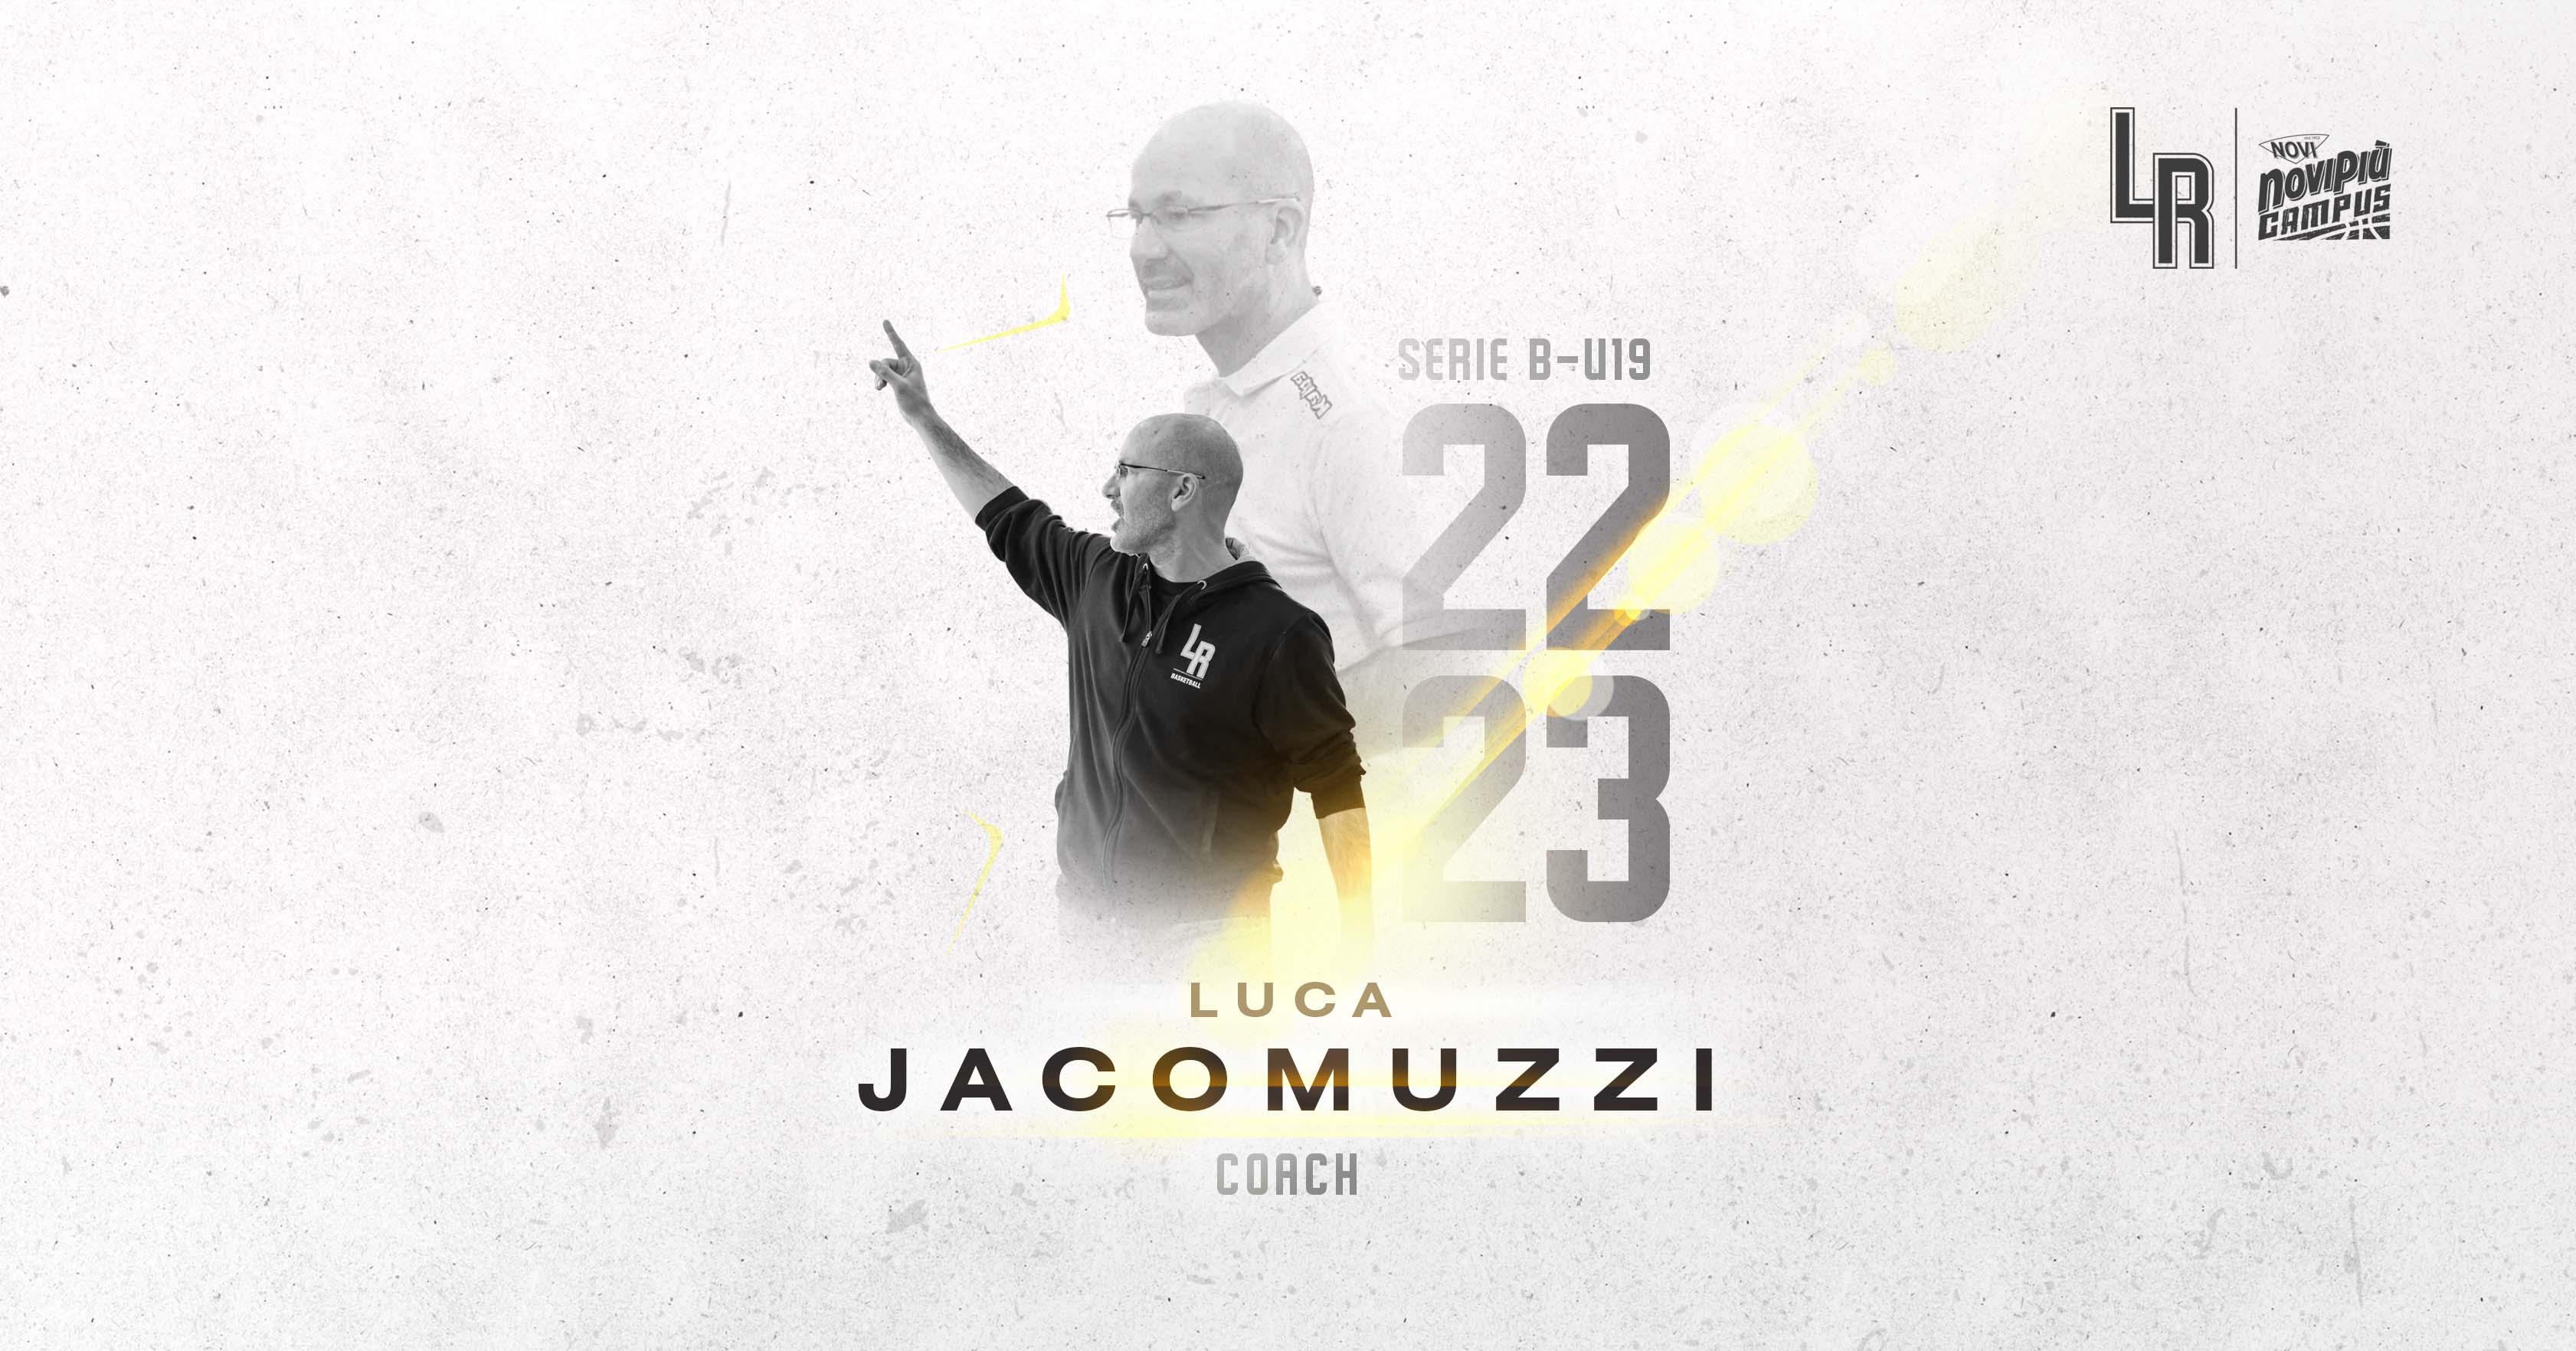 Coach Jacomuzzi sarà la guida di Serie B e U19 Eccellenza